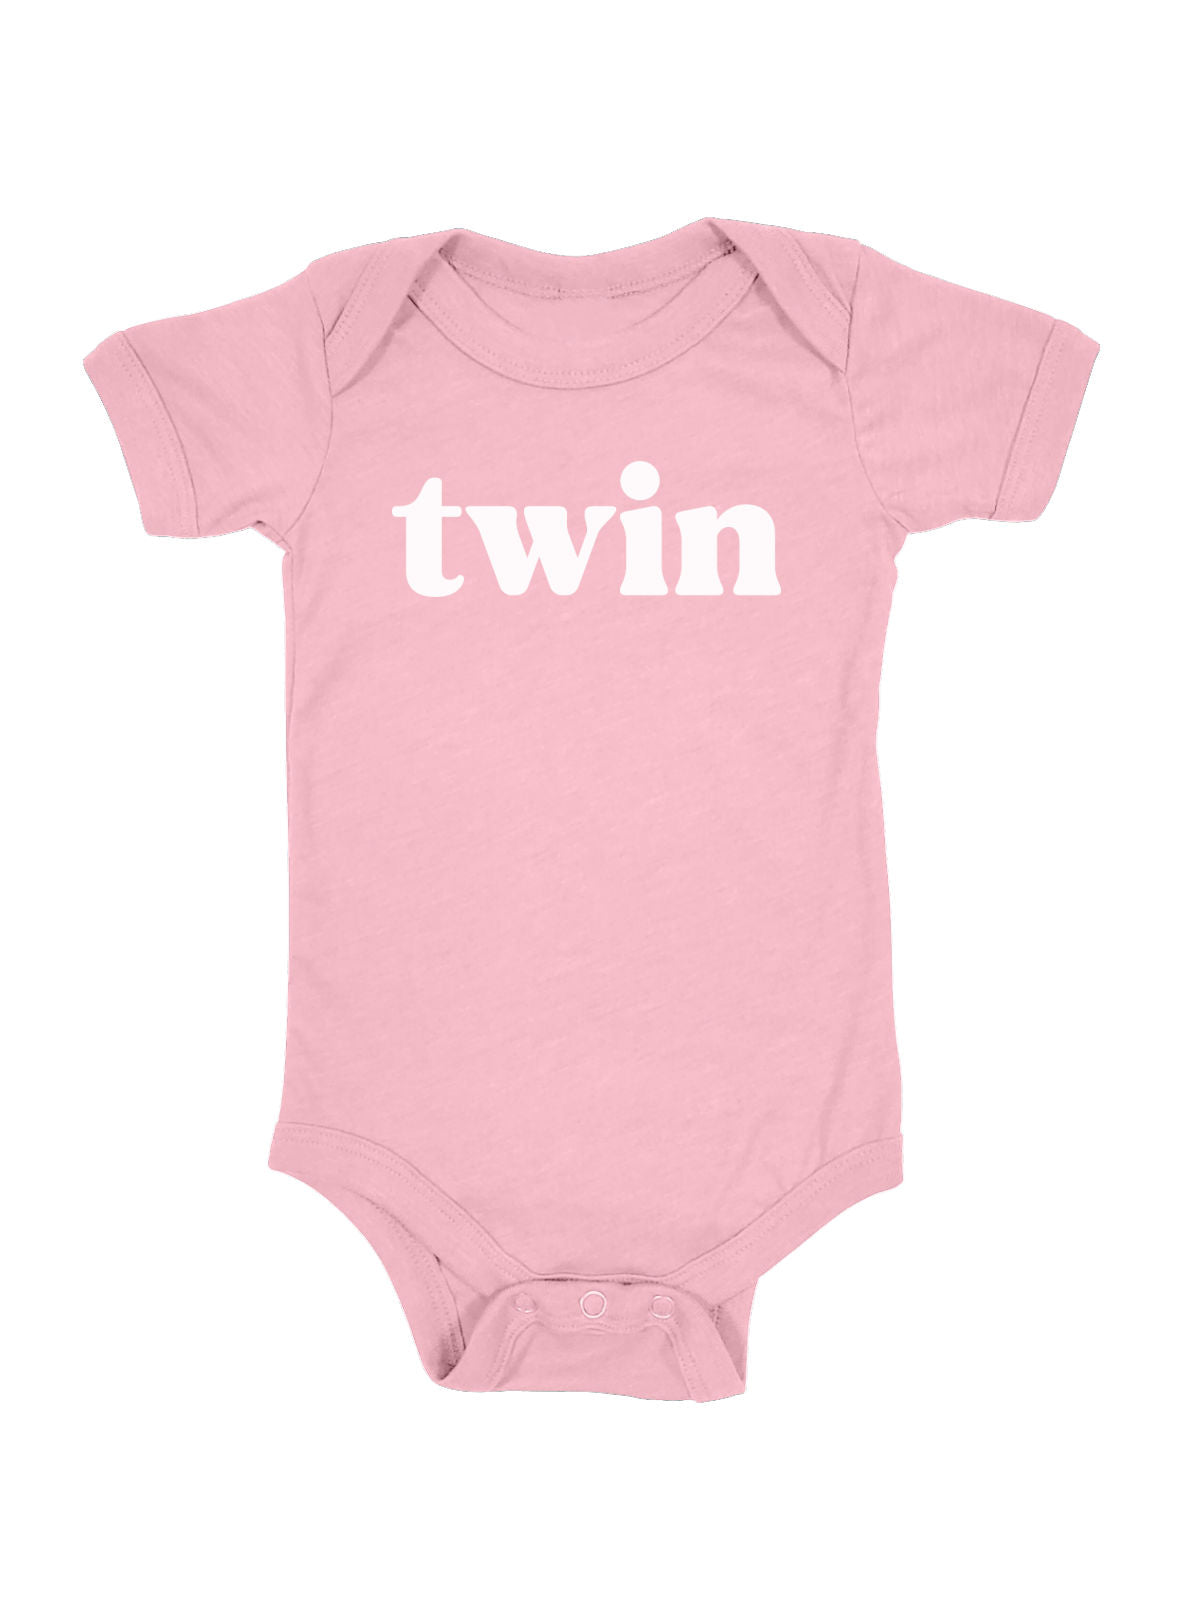 Twin Baby Girl Bodysuit in Pink